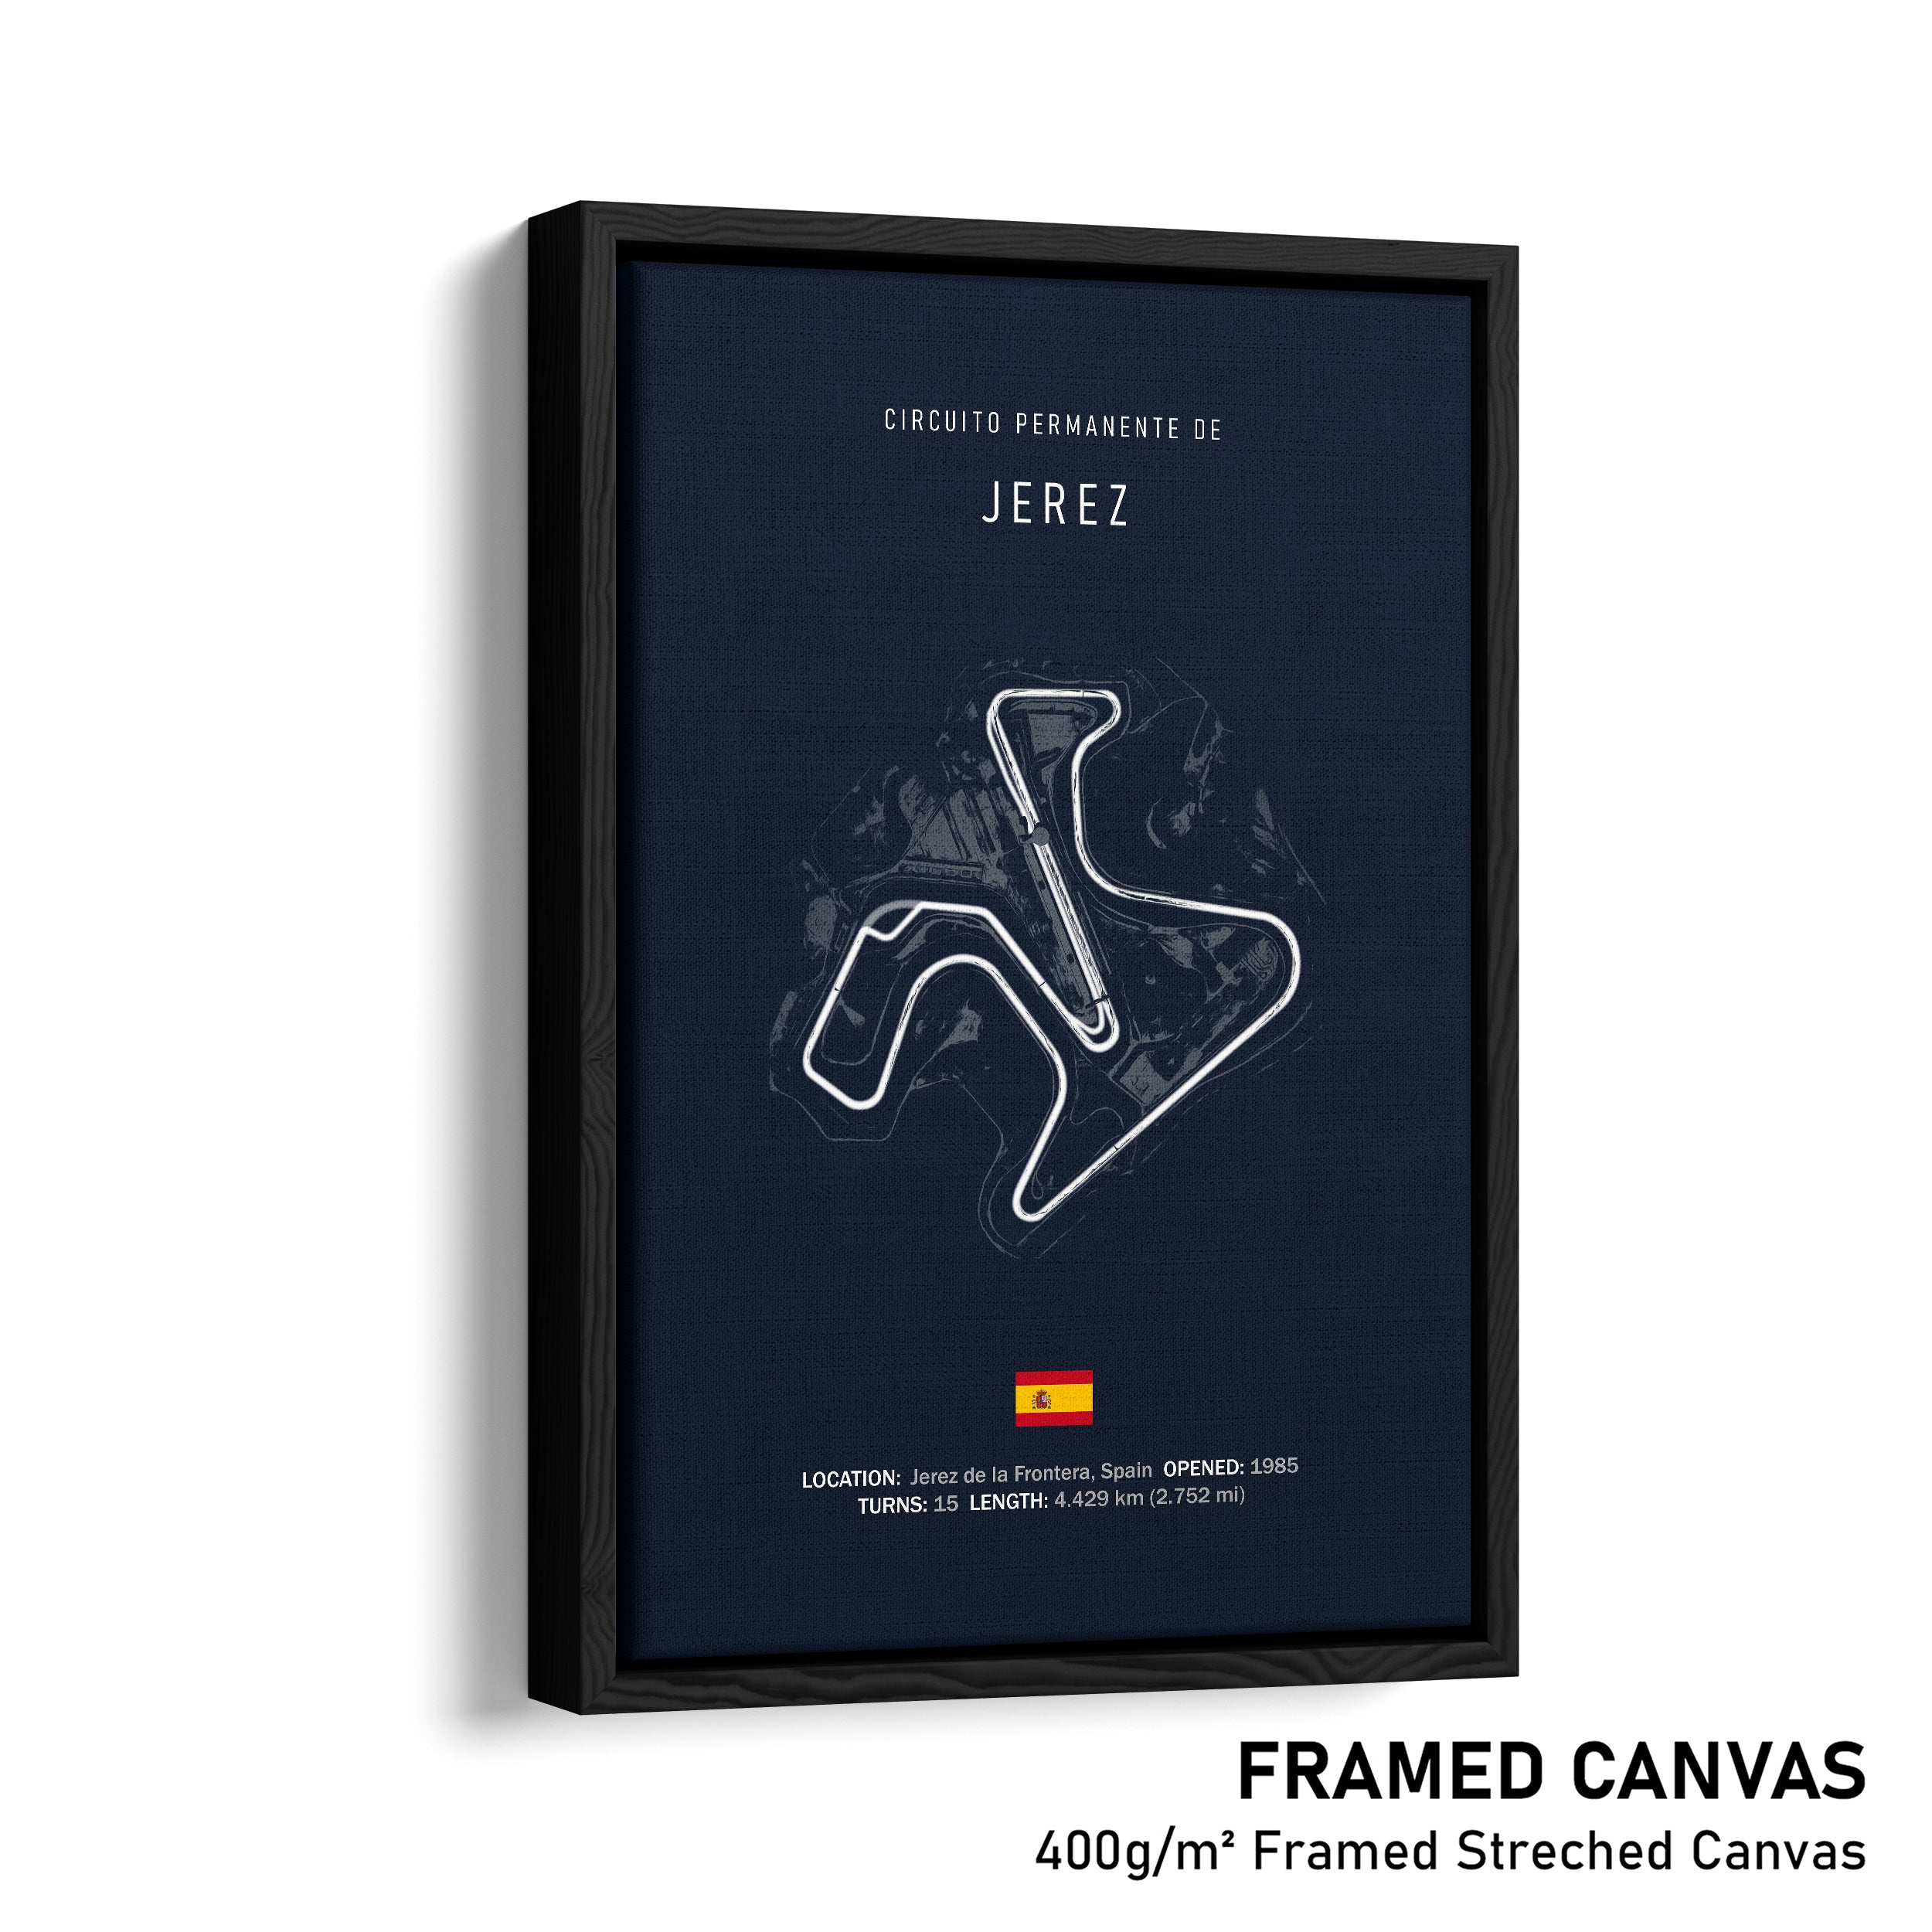 Circuito de Jerez (Grand Prix Circuit) - Racetrack Print